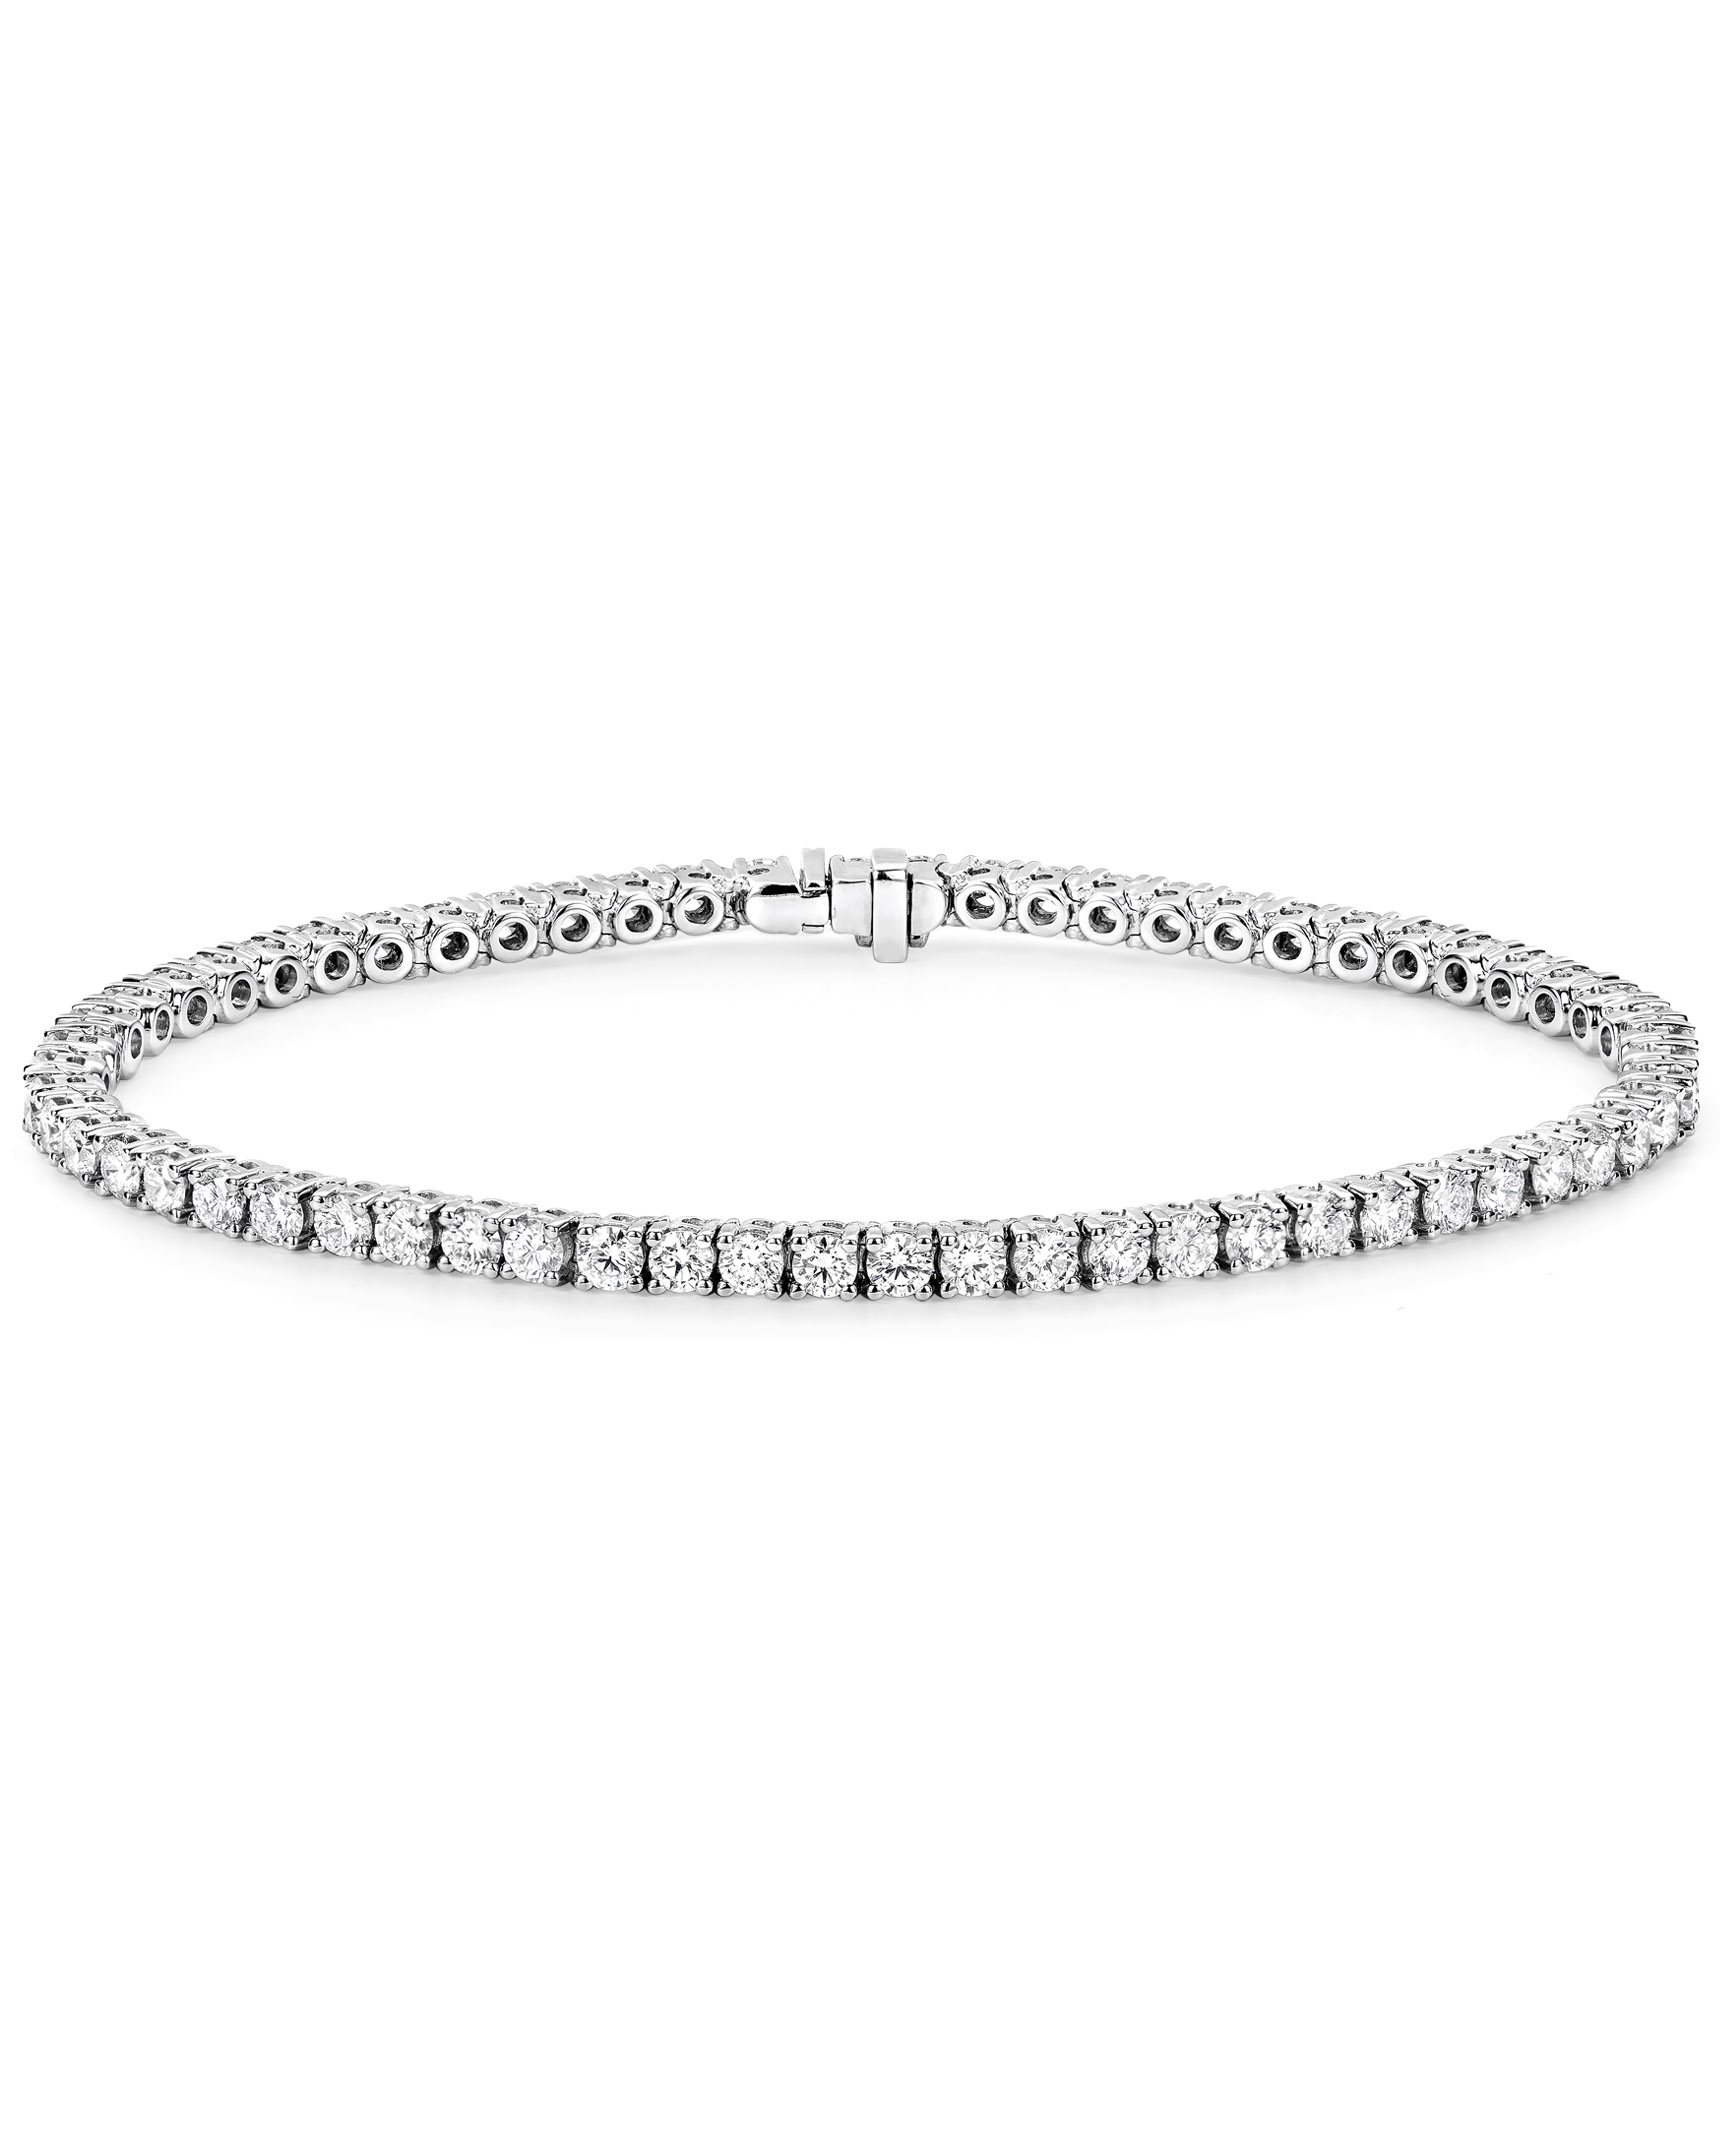 Platinum and Round Brilliant Cut Diamond Tennis Bracelet - Turgeon Raine